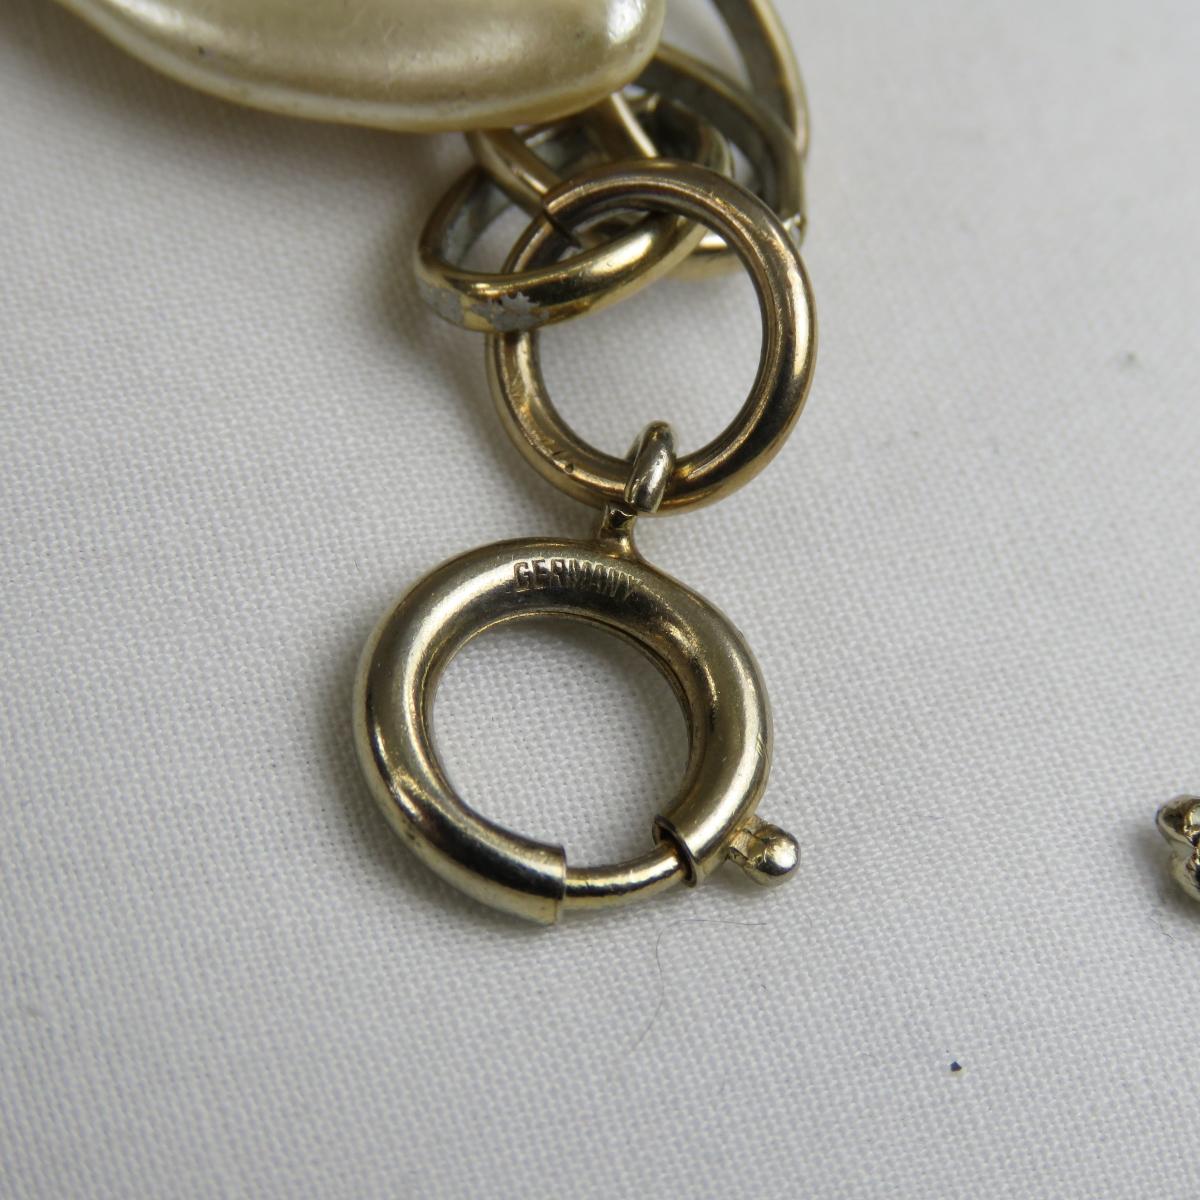 Vintage ART Seashell & 2 Other Charm Bracelets